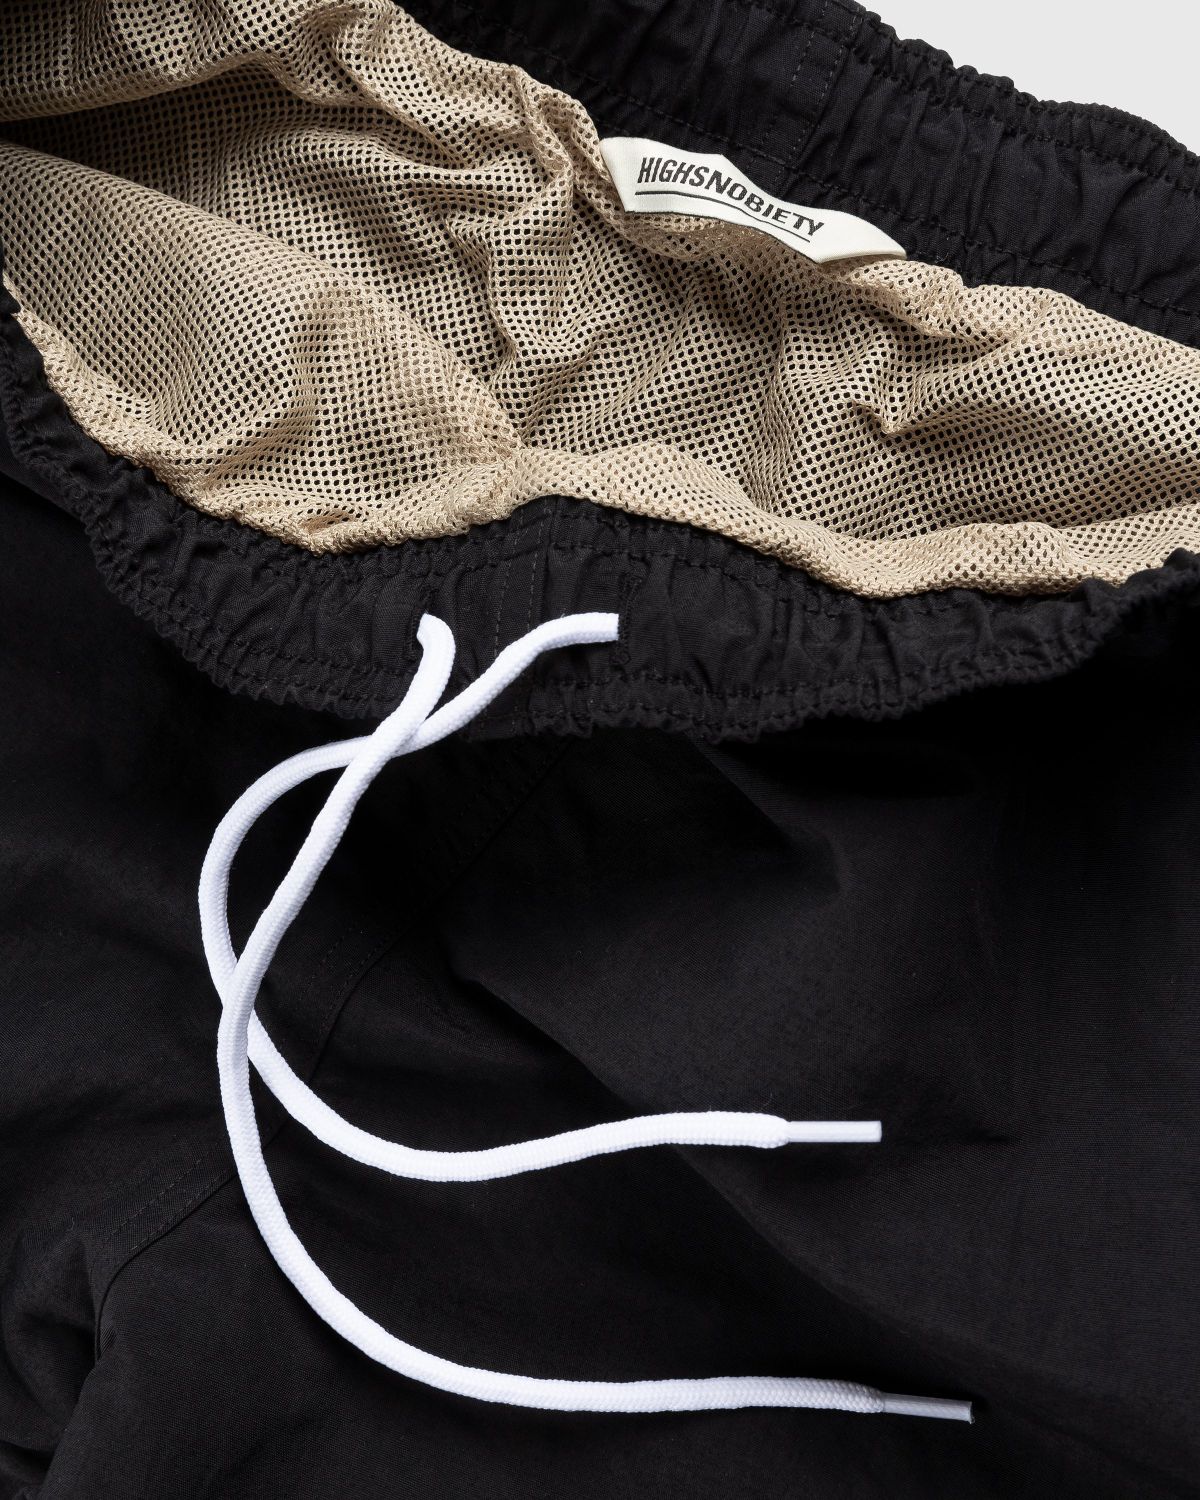 RUF x Highsnobiety – Water Shorts Black - Swim Shorts - Black - Image 6